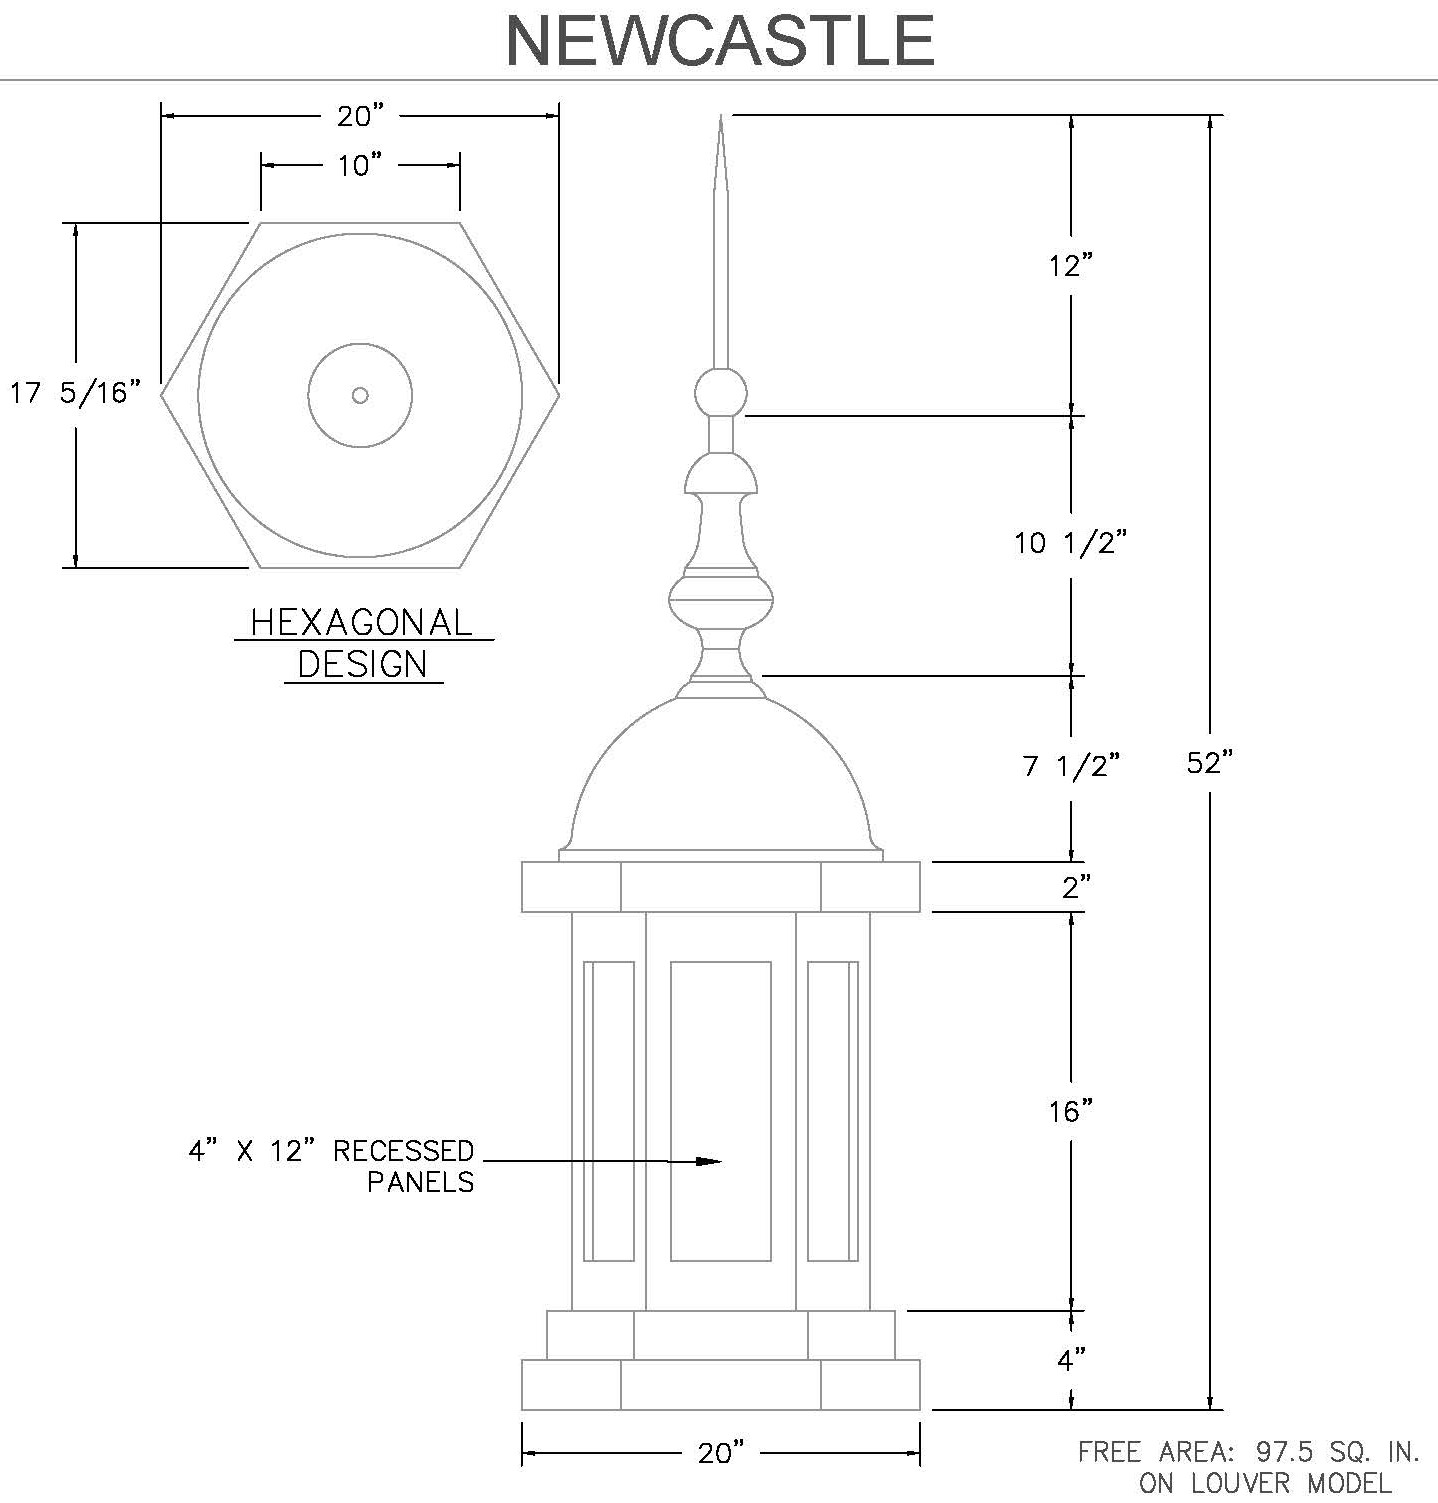 Newcastle Cupola Detail